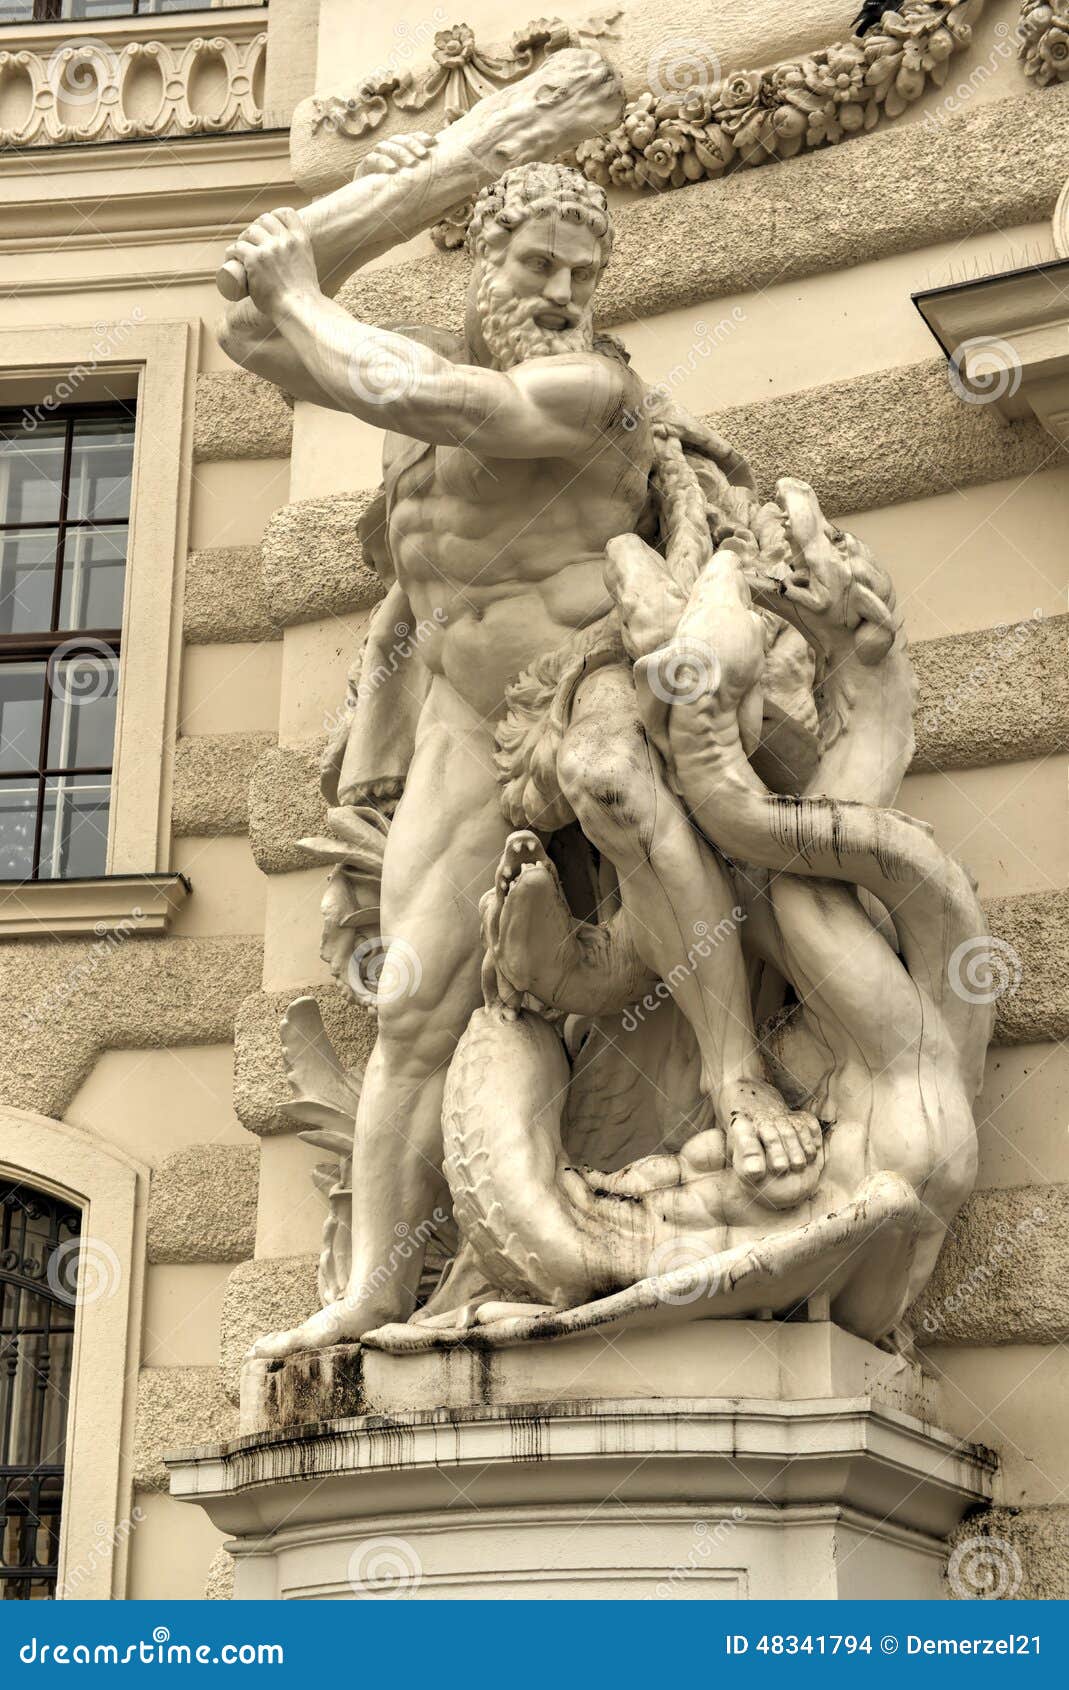 hercules statue - vienna, austria